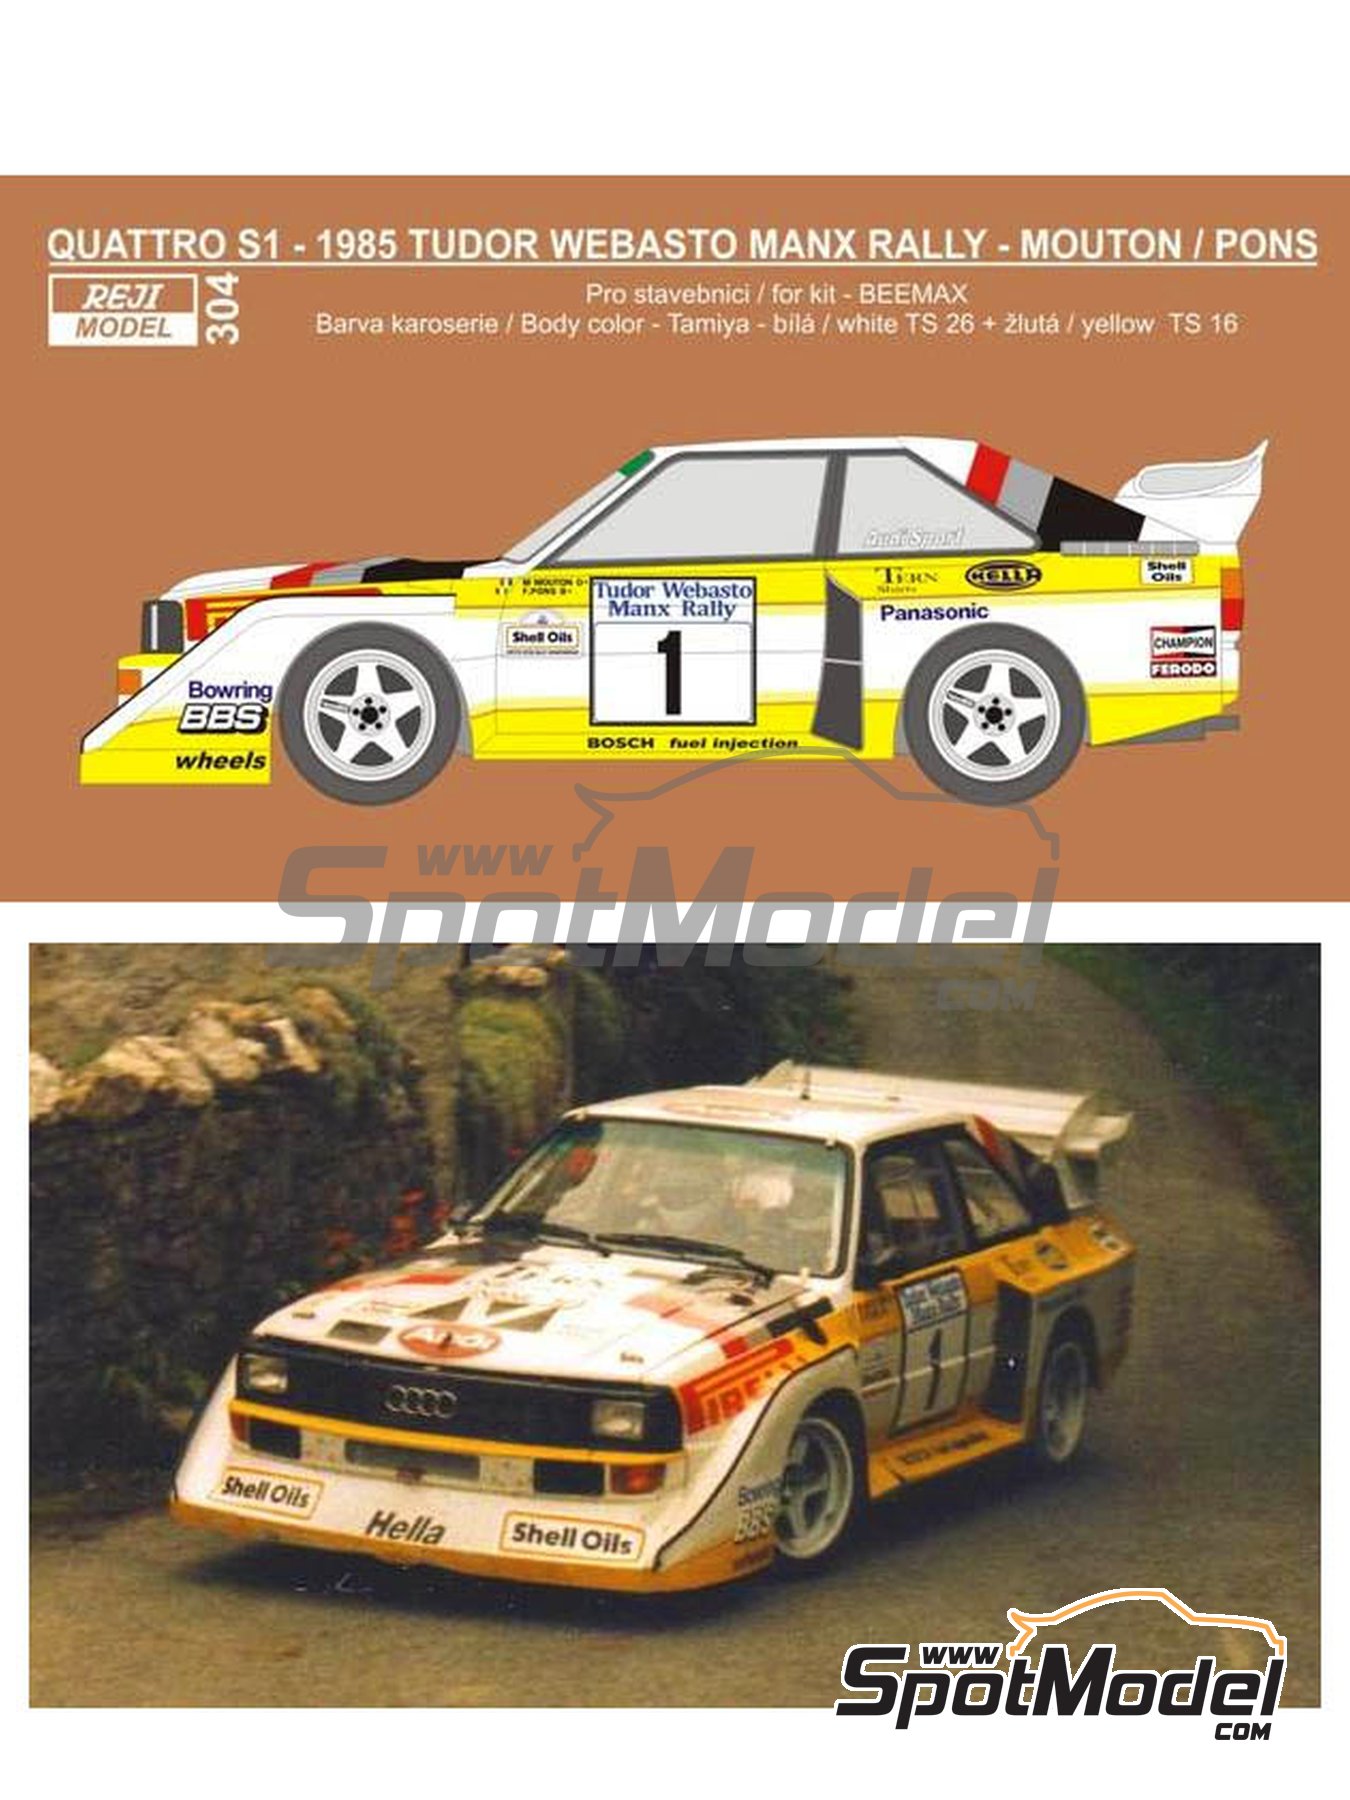 Tudor Webasto Manx Rally Motorsport Sticker Decal 